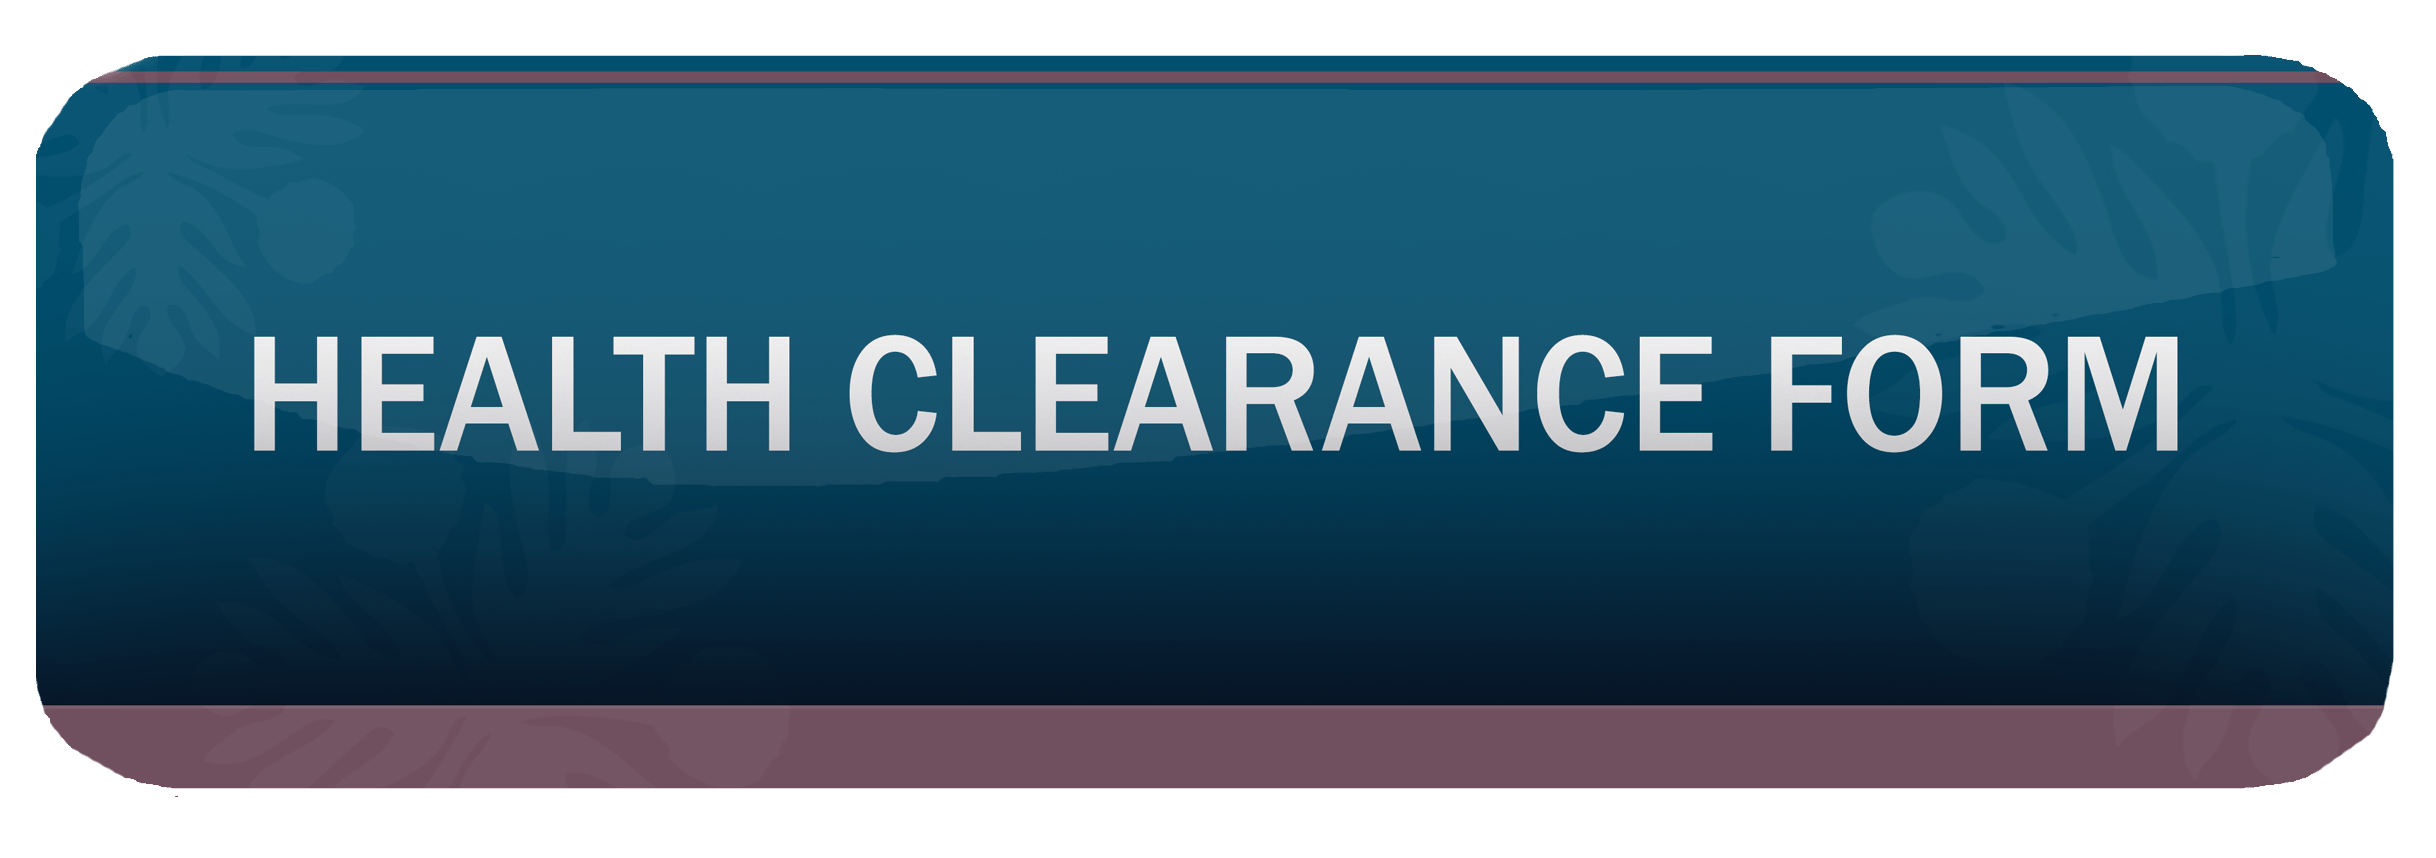 Health Clearance form